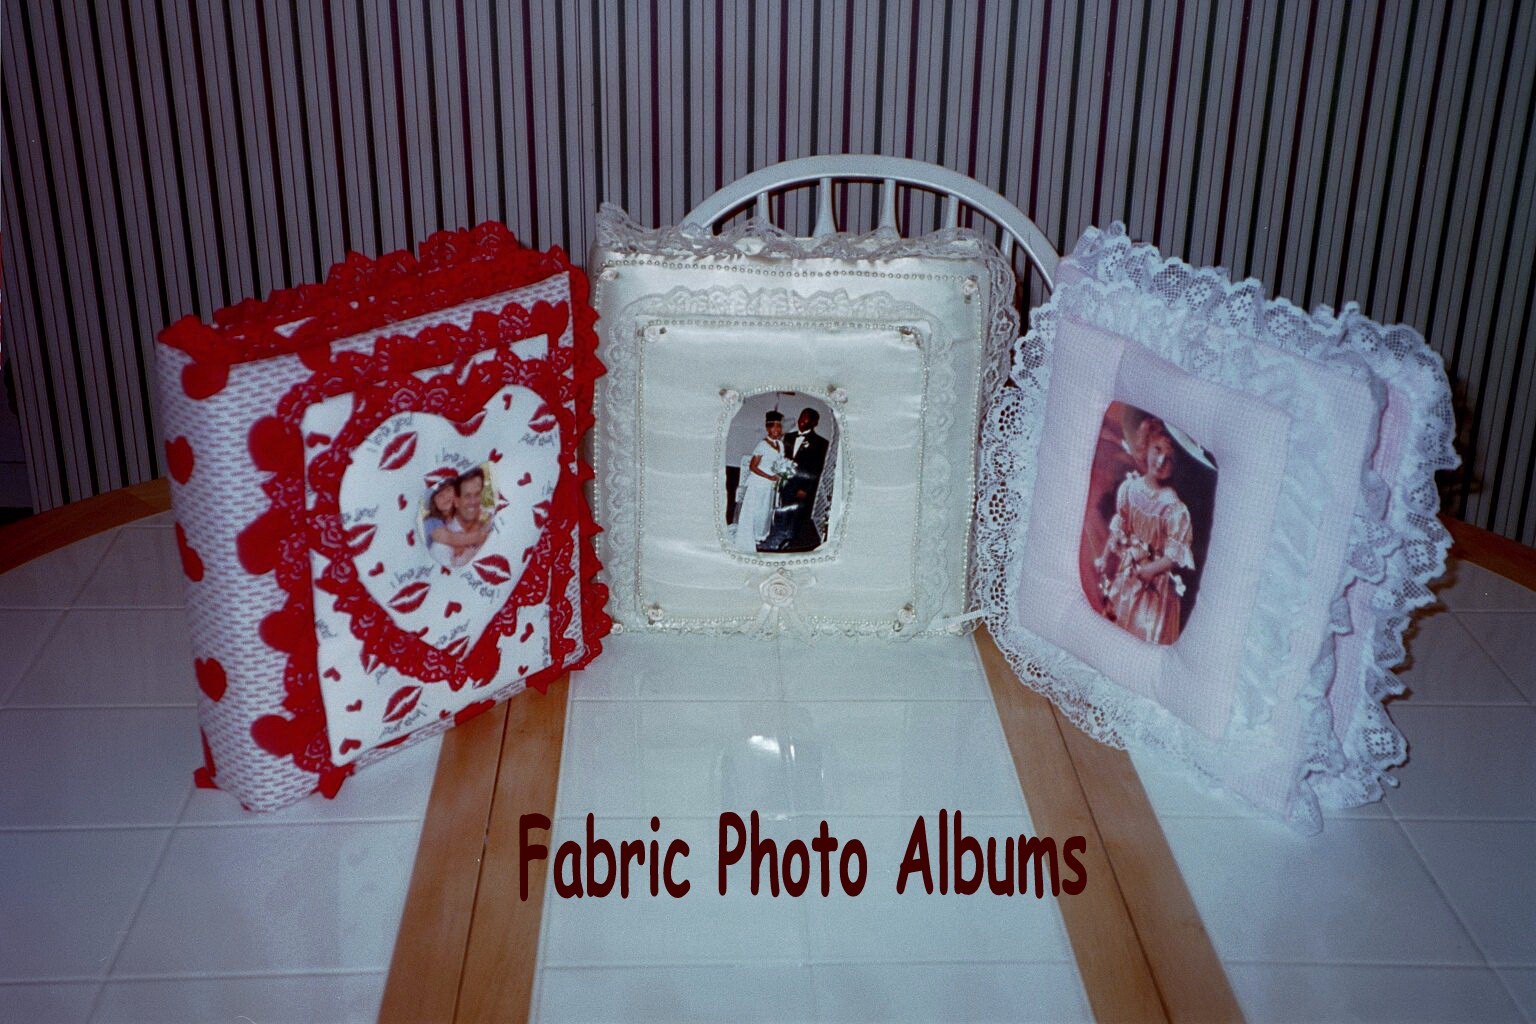 fabricphotoalbums.jpg